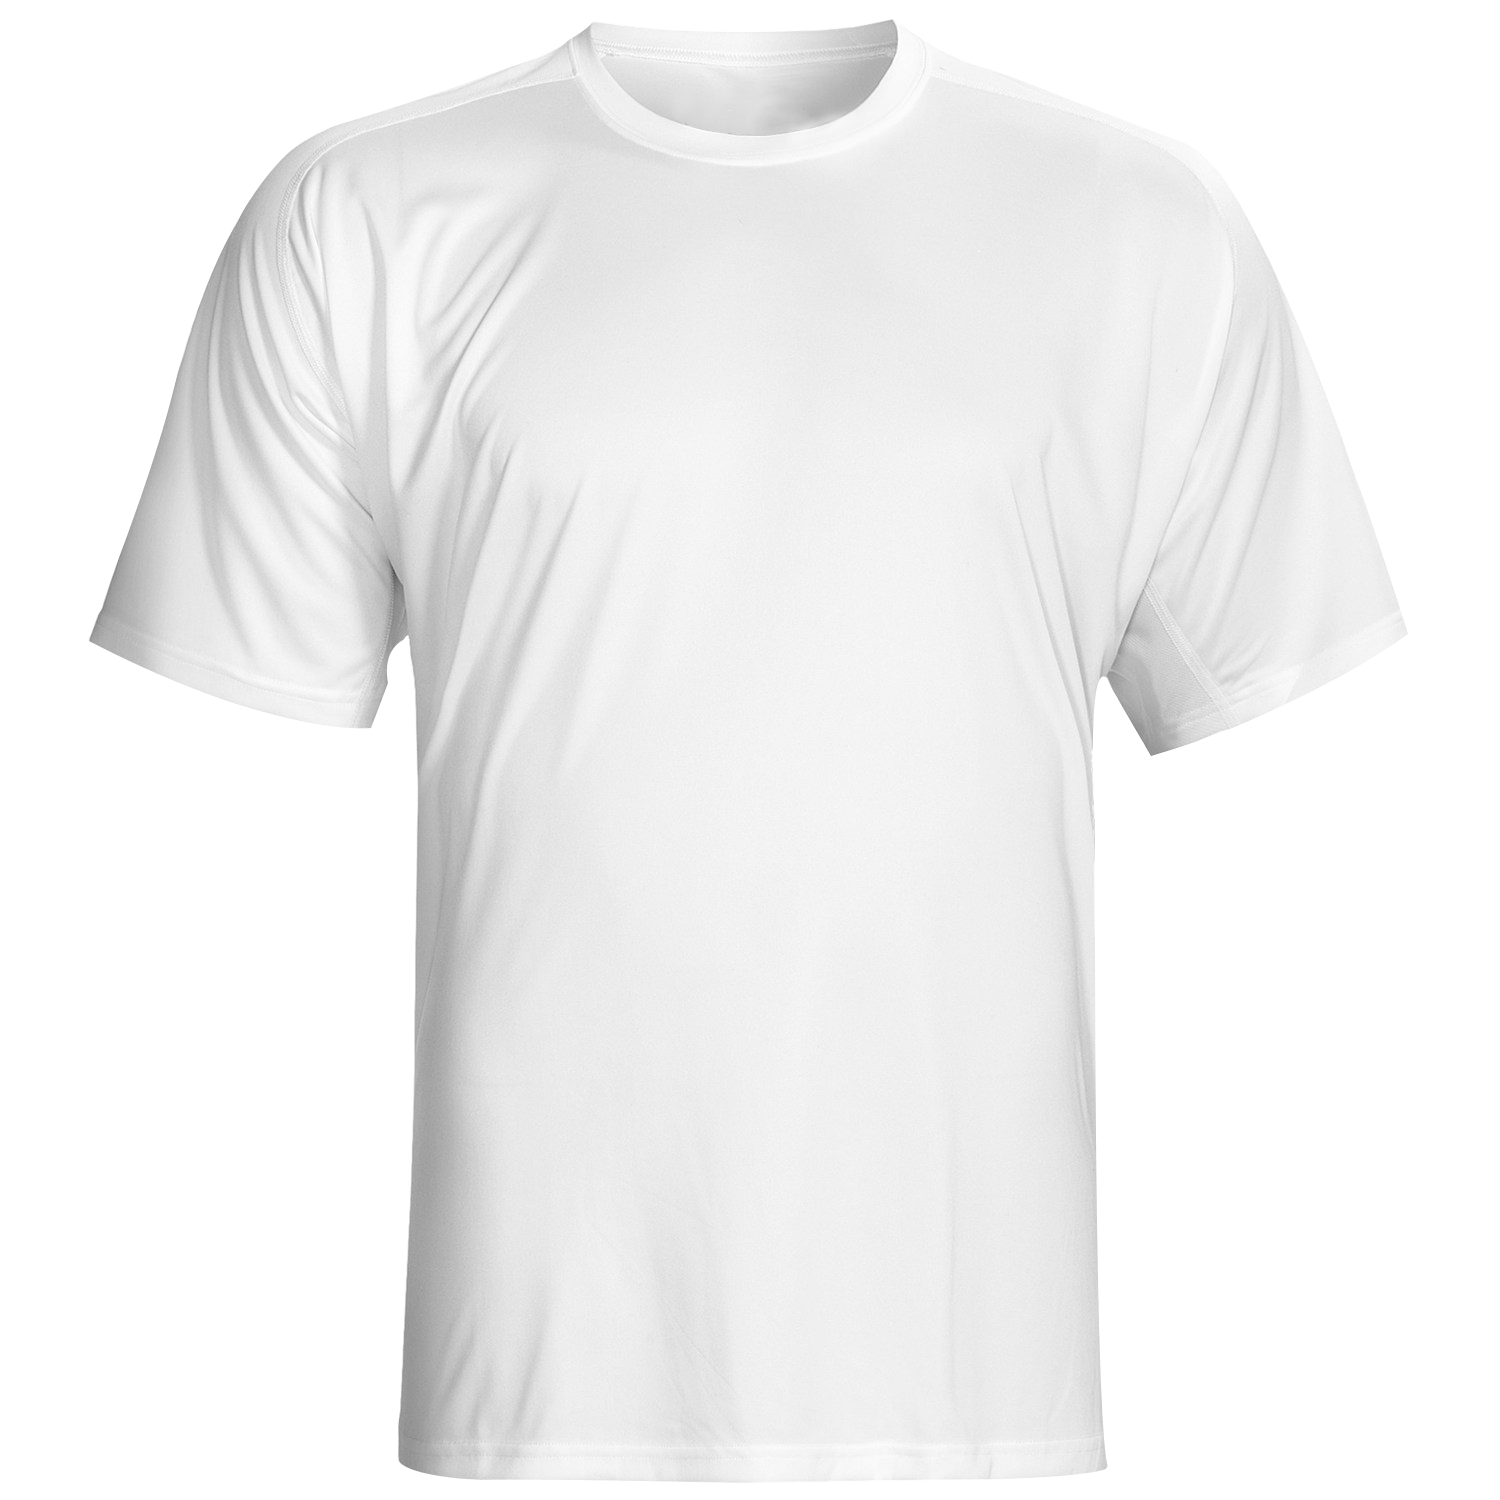 Best Price for Custom Embroidered T Shirts - OEM Custom logo plain white cotton T shirt – Gift